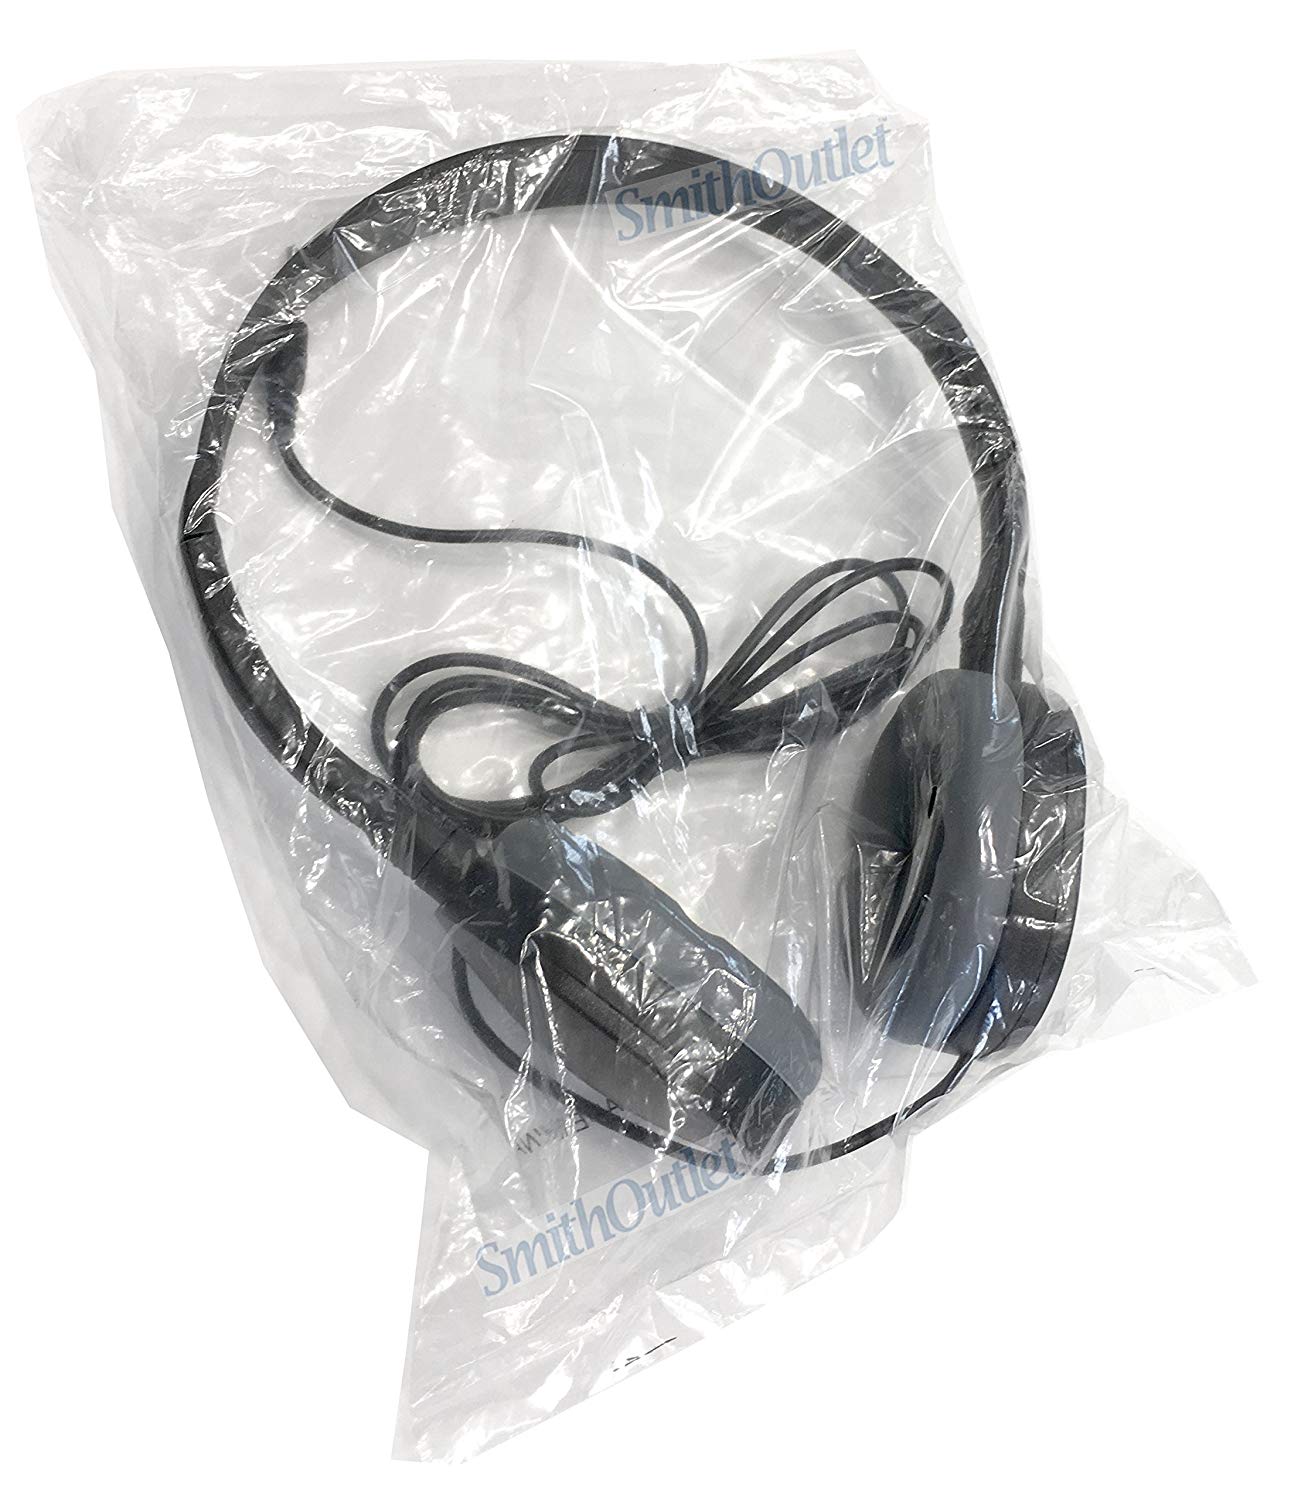 SmithOutlet Rubber Earpad Headphones Bagged